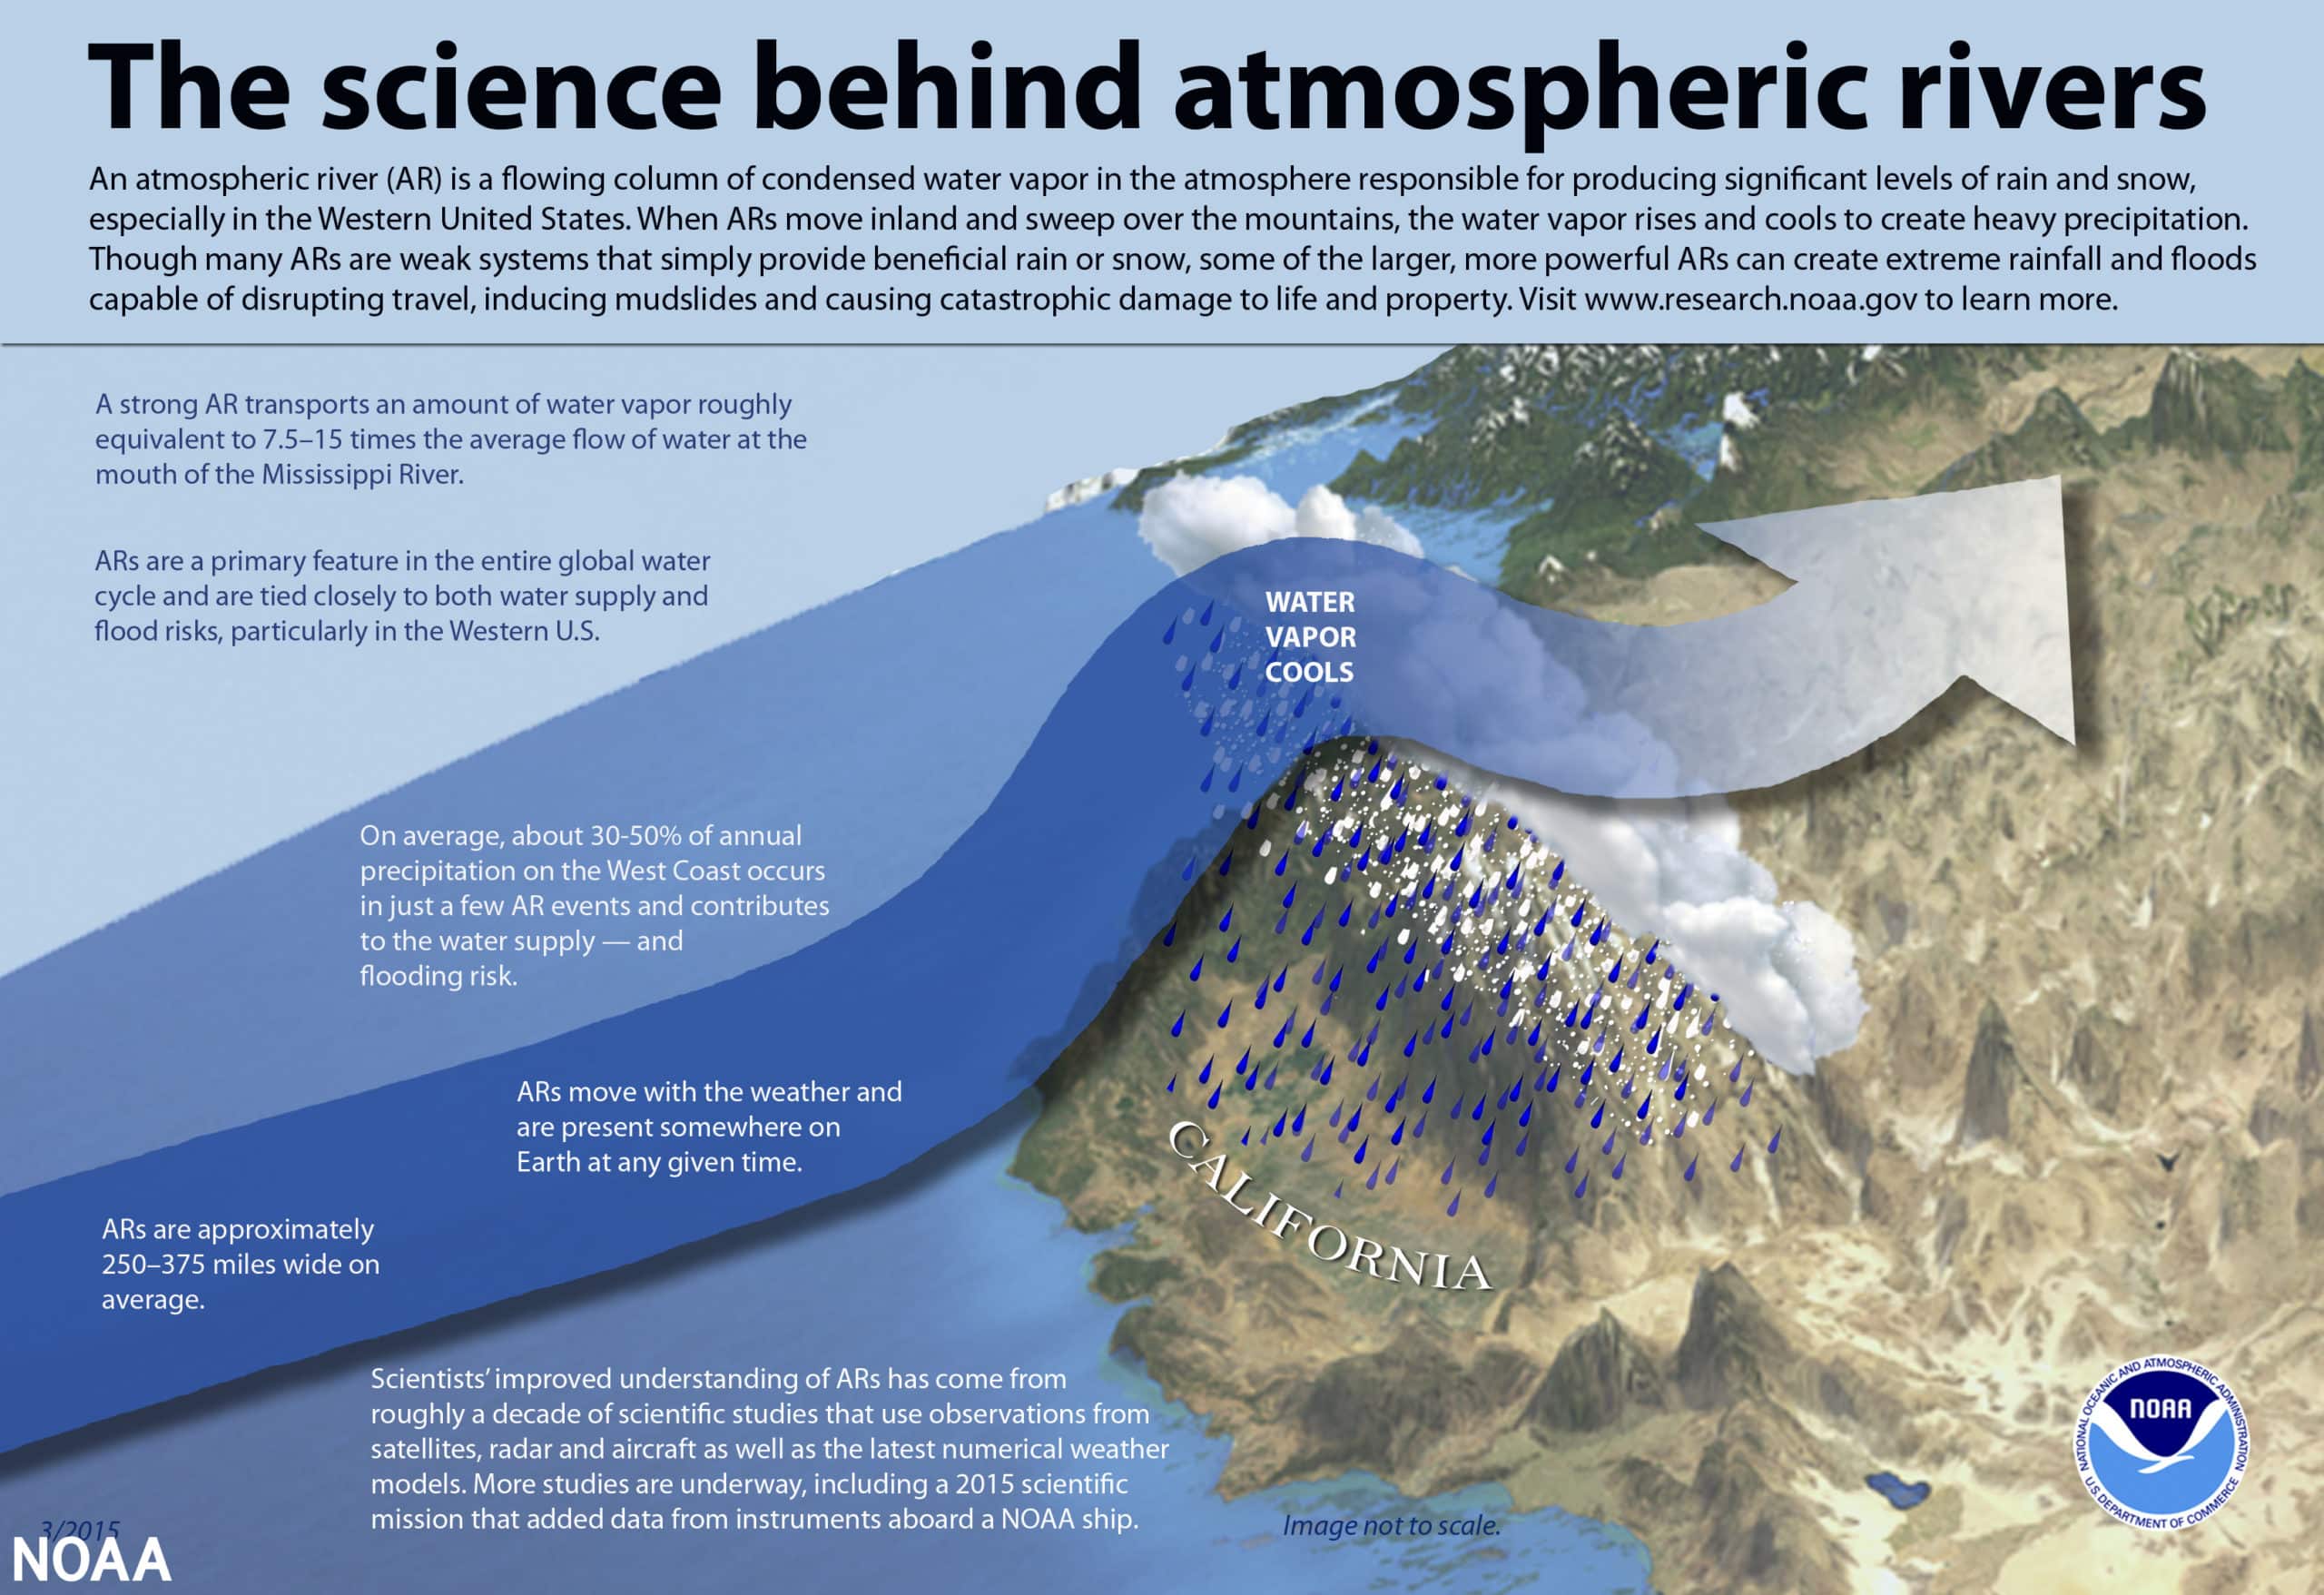 atmospheric river; california floods; The science behind atmospheric rivers. Image by NOAA.